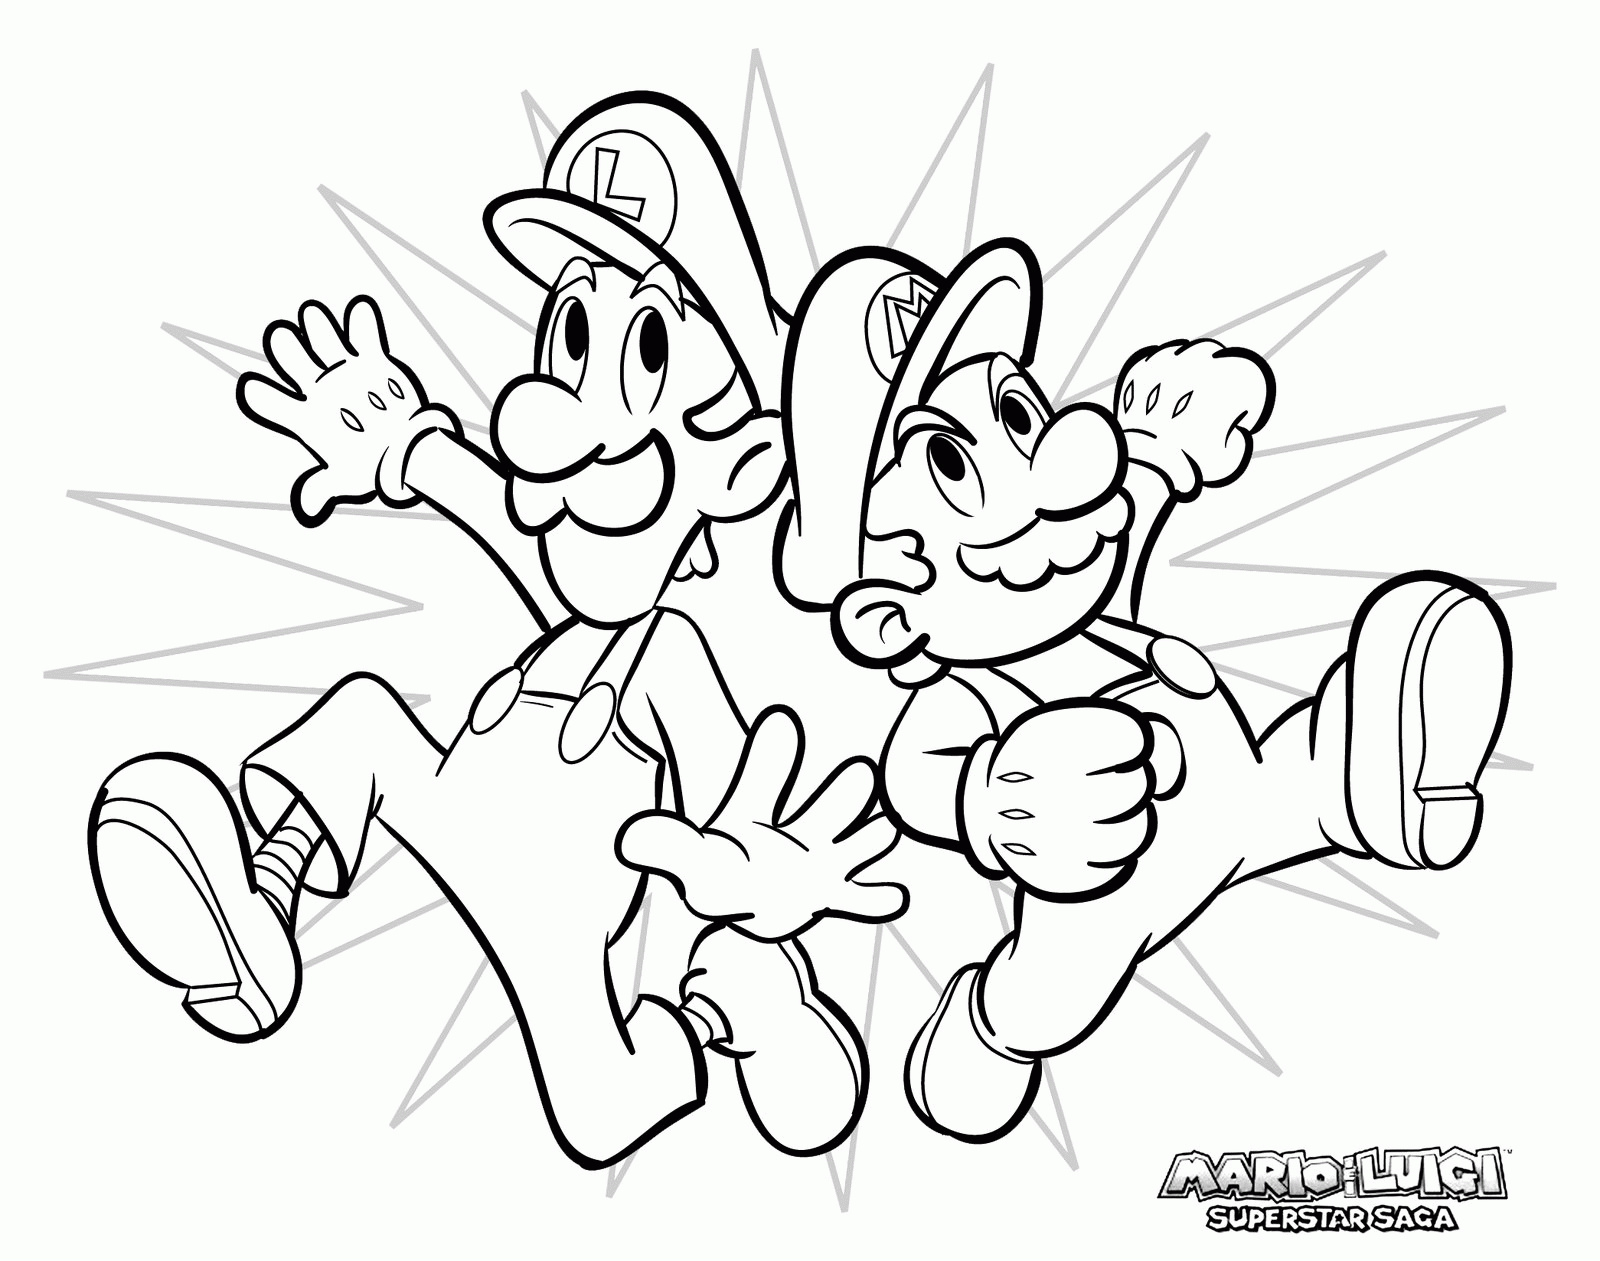 Les frères Mario et Luigi